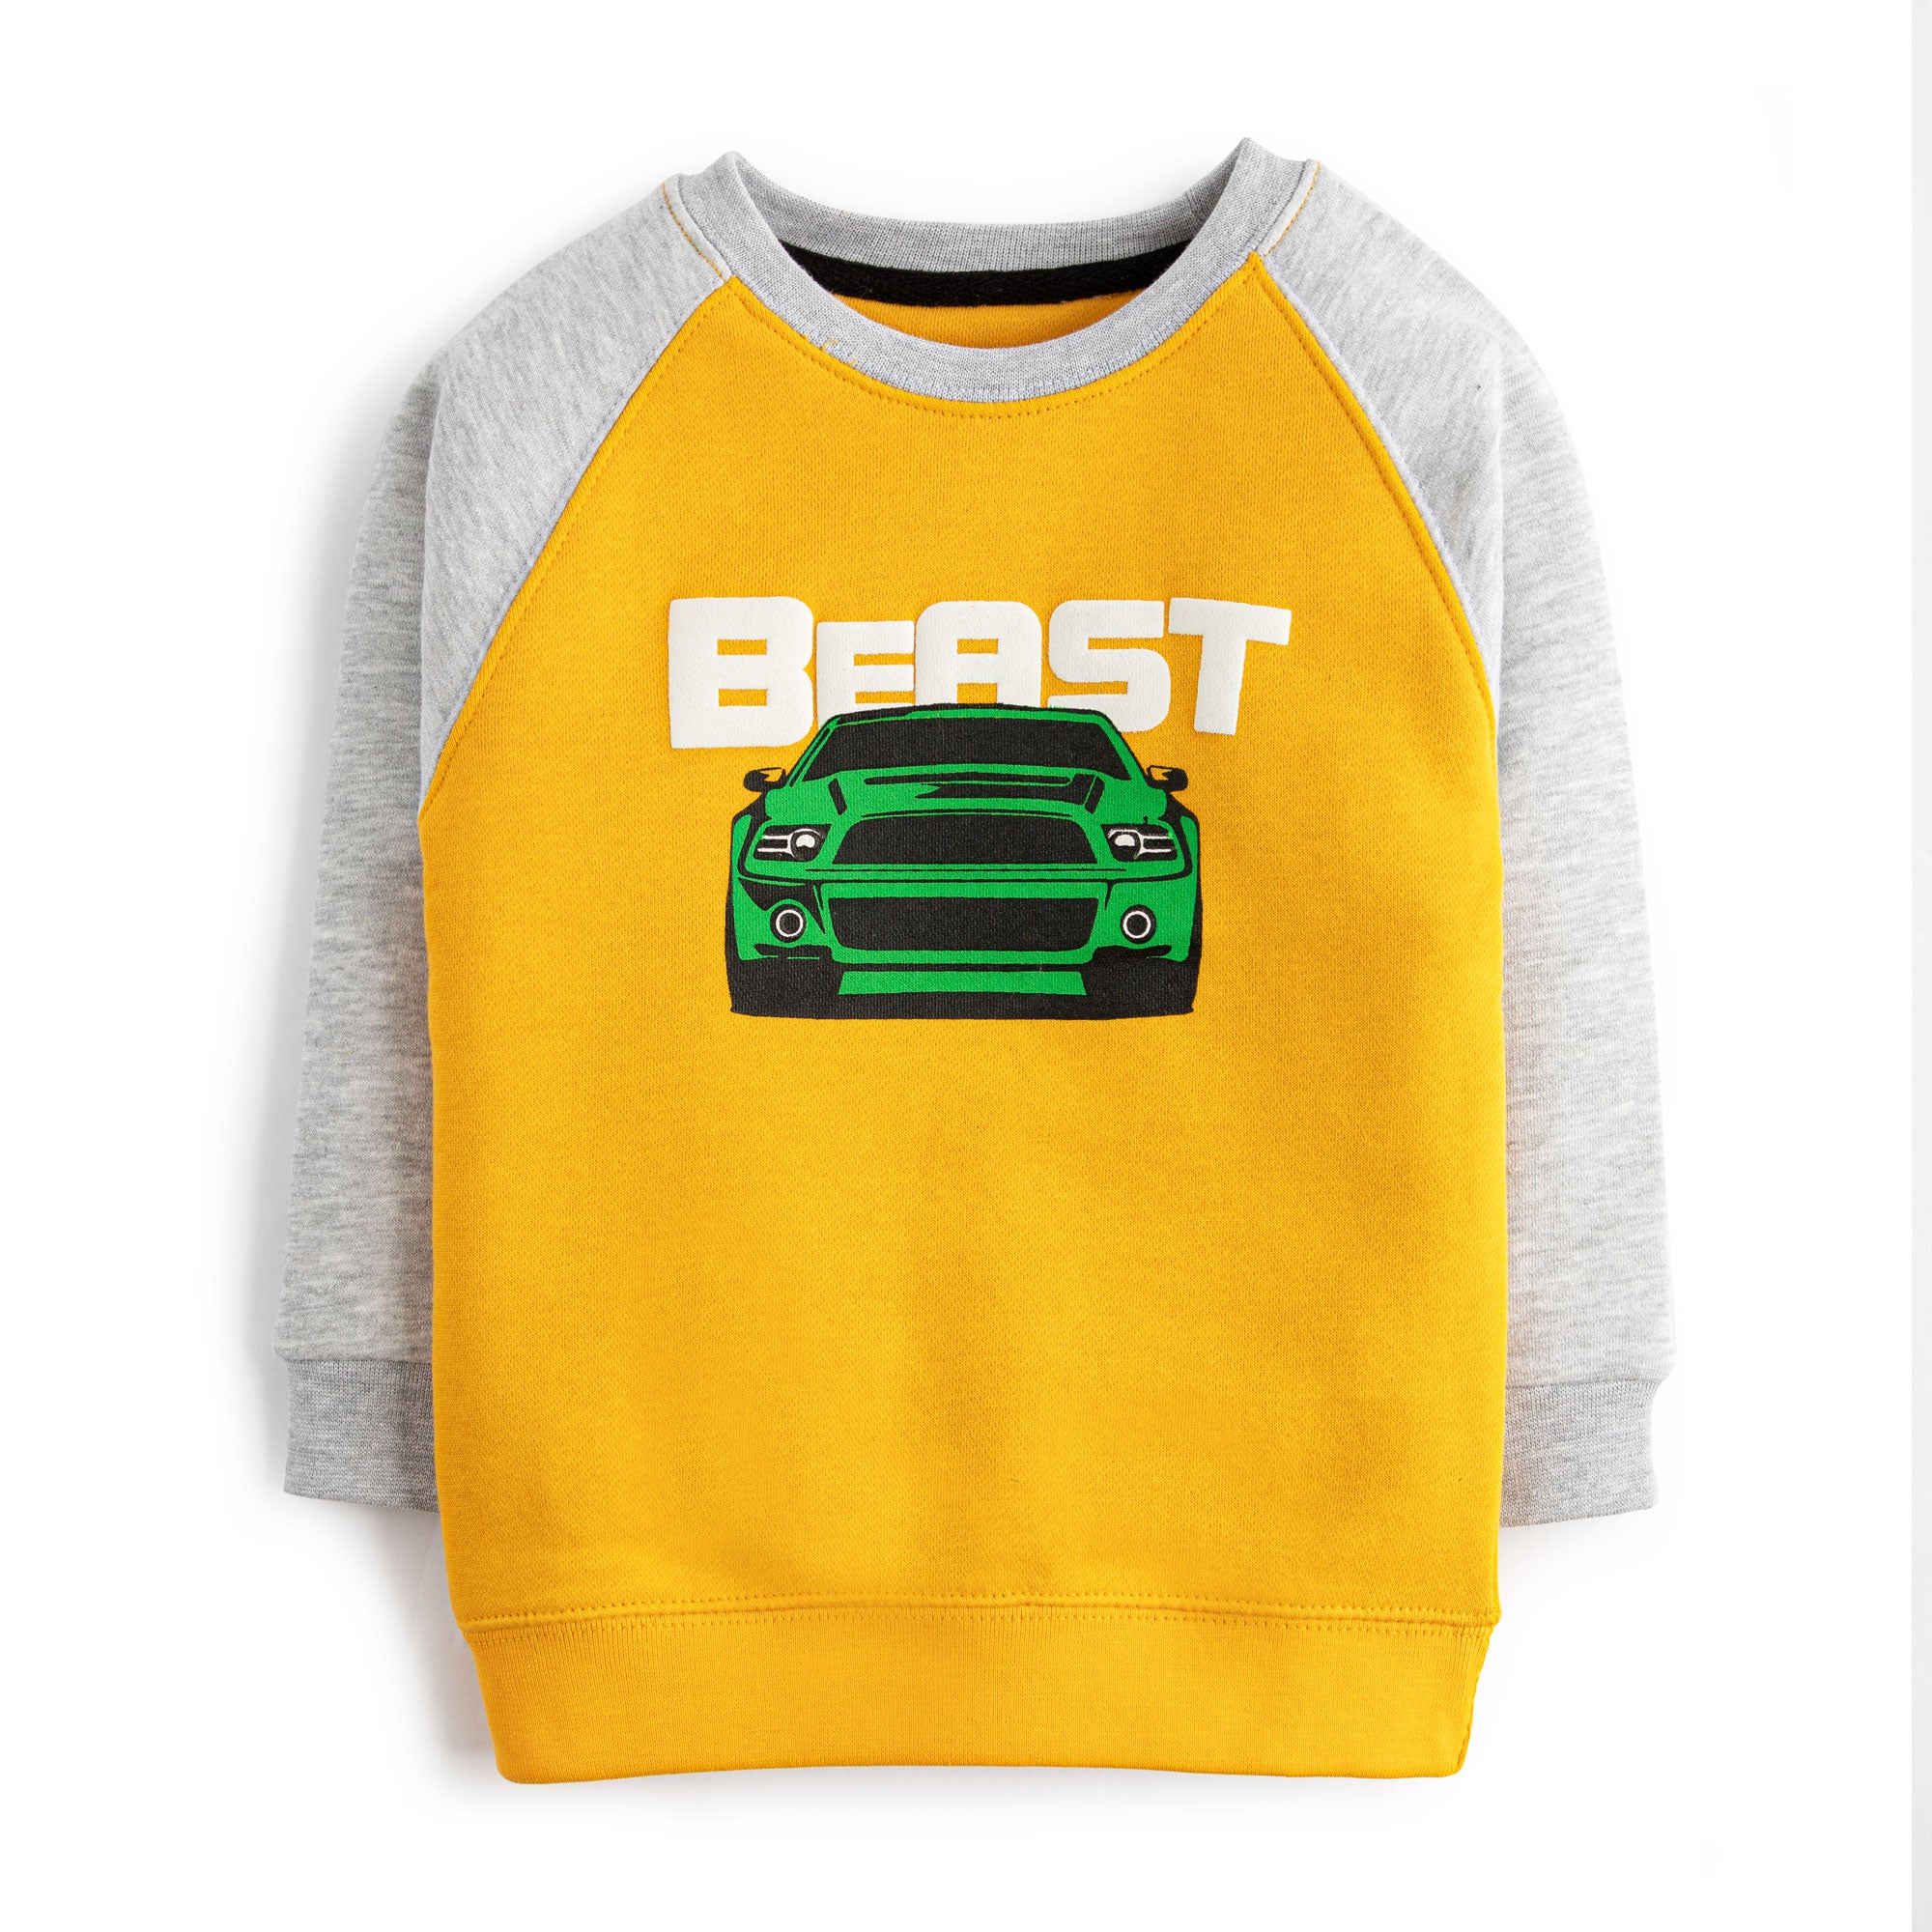 Beast Car Sweatshirt